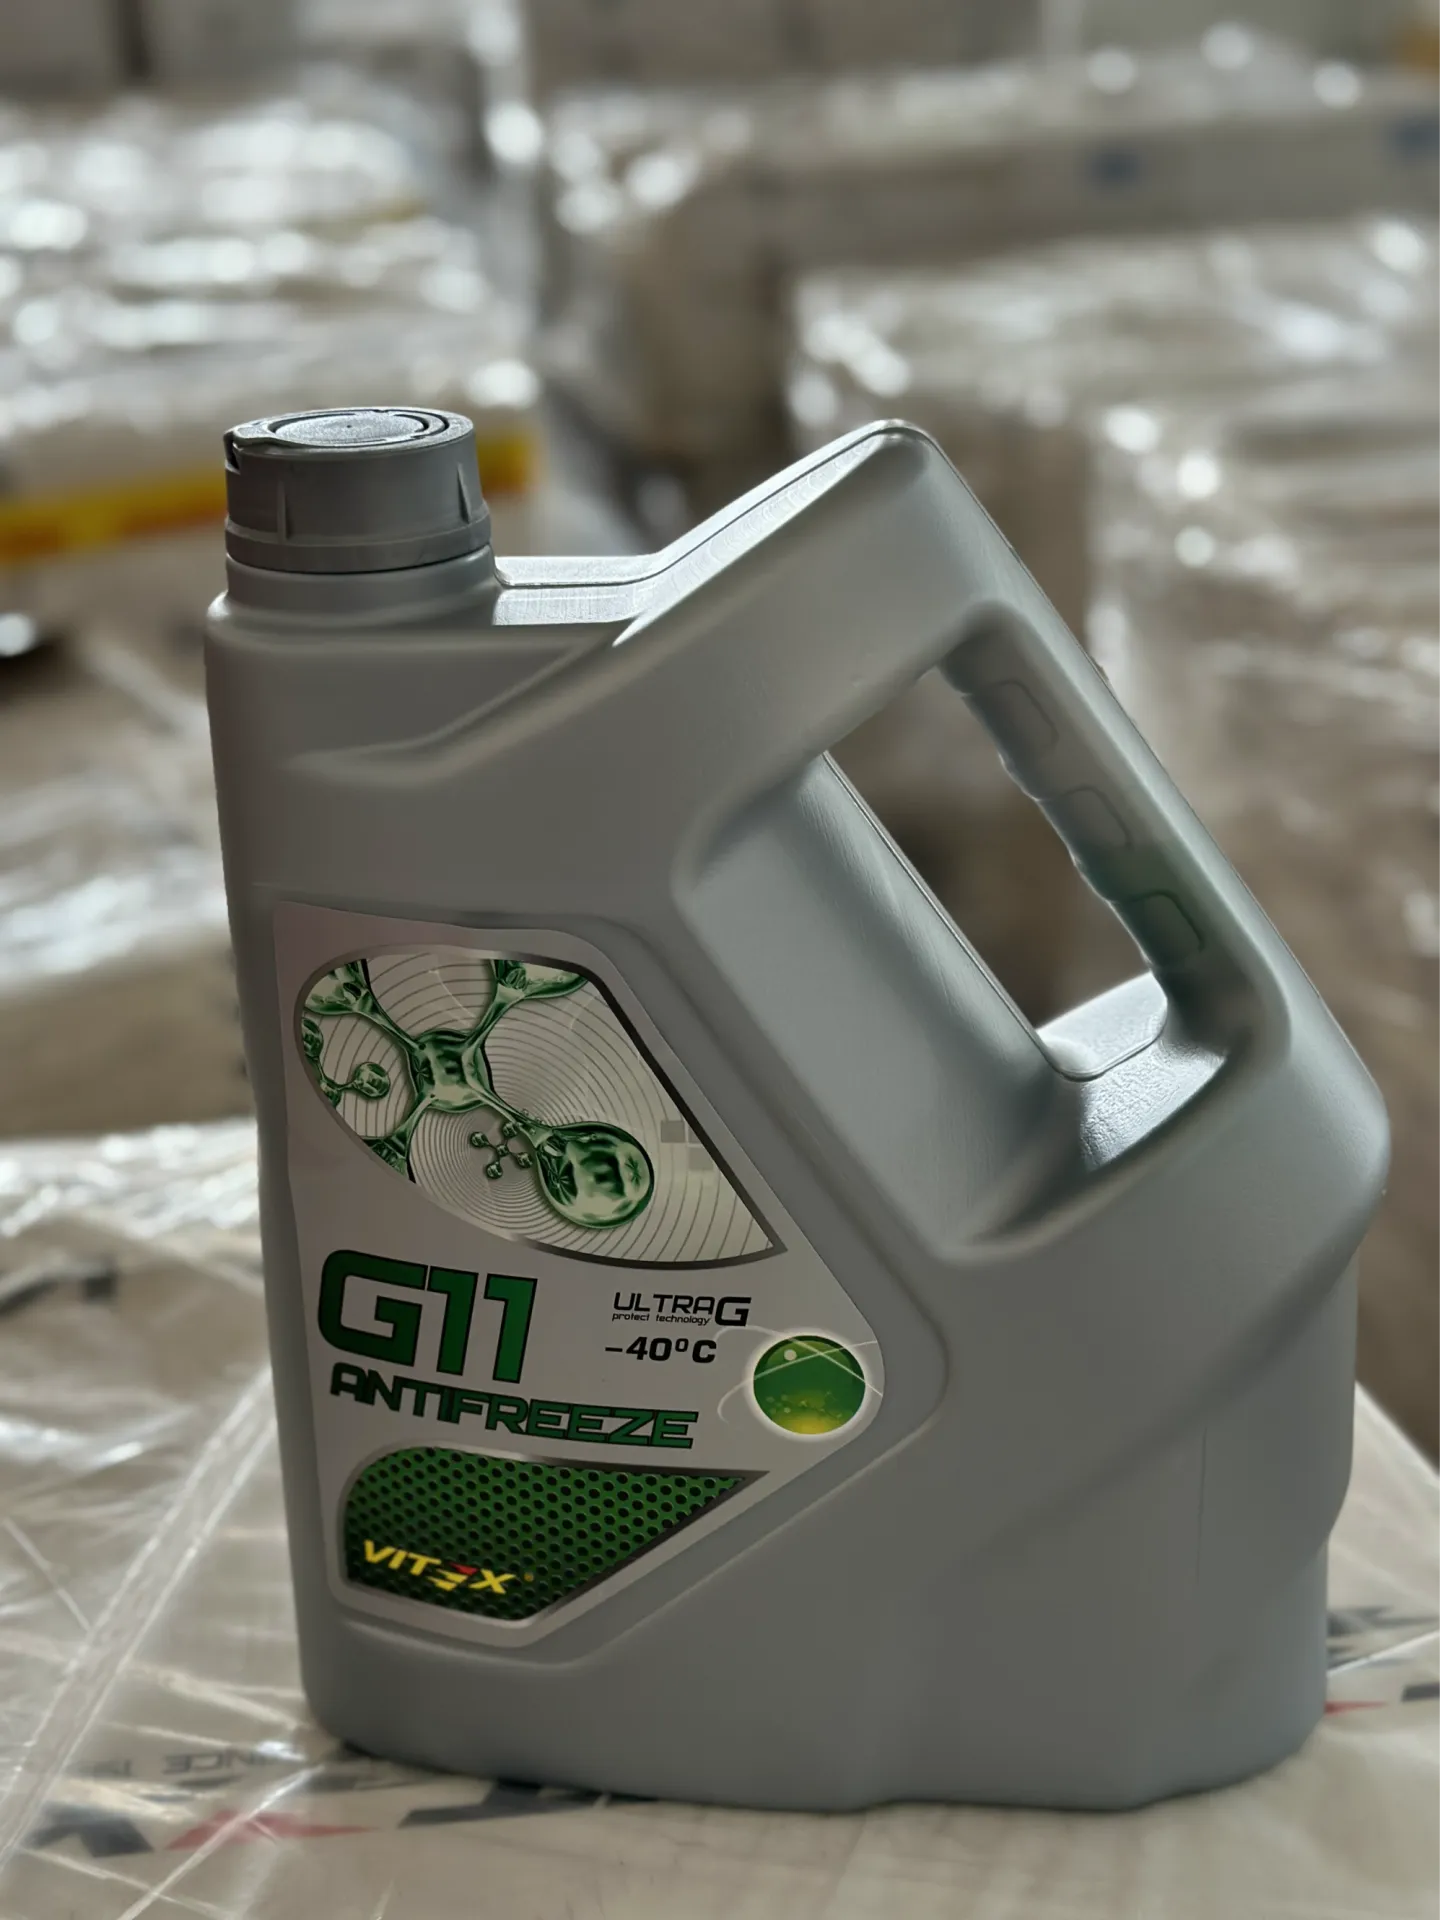 Антифриз Antifreeze «Vitex G11-40 Ultra G» (1 кг.) Цвет: зеленый#1